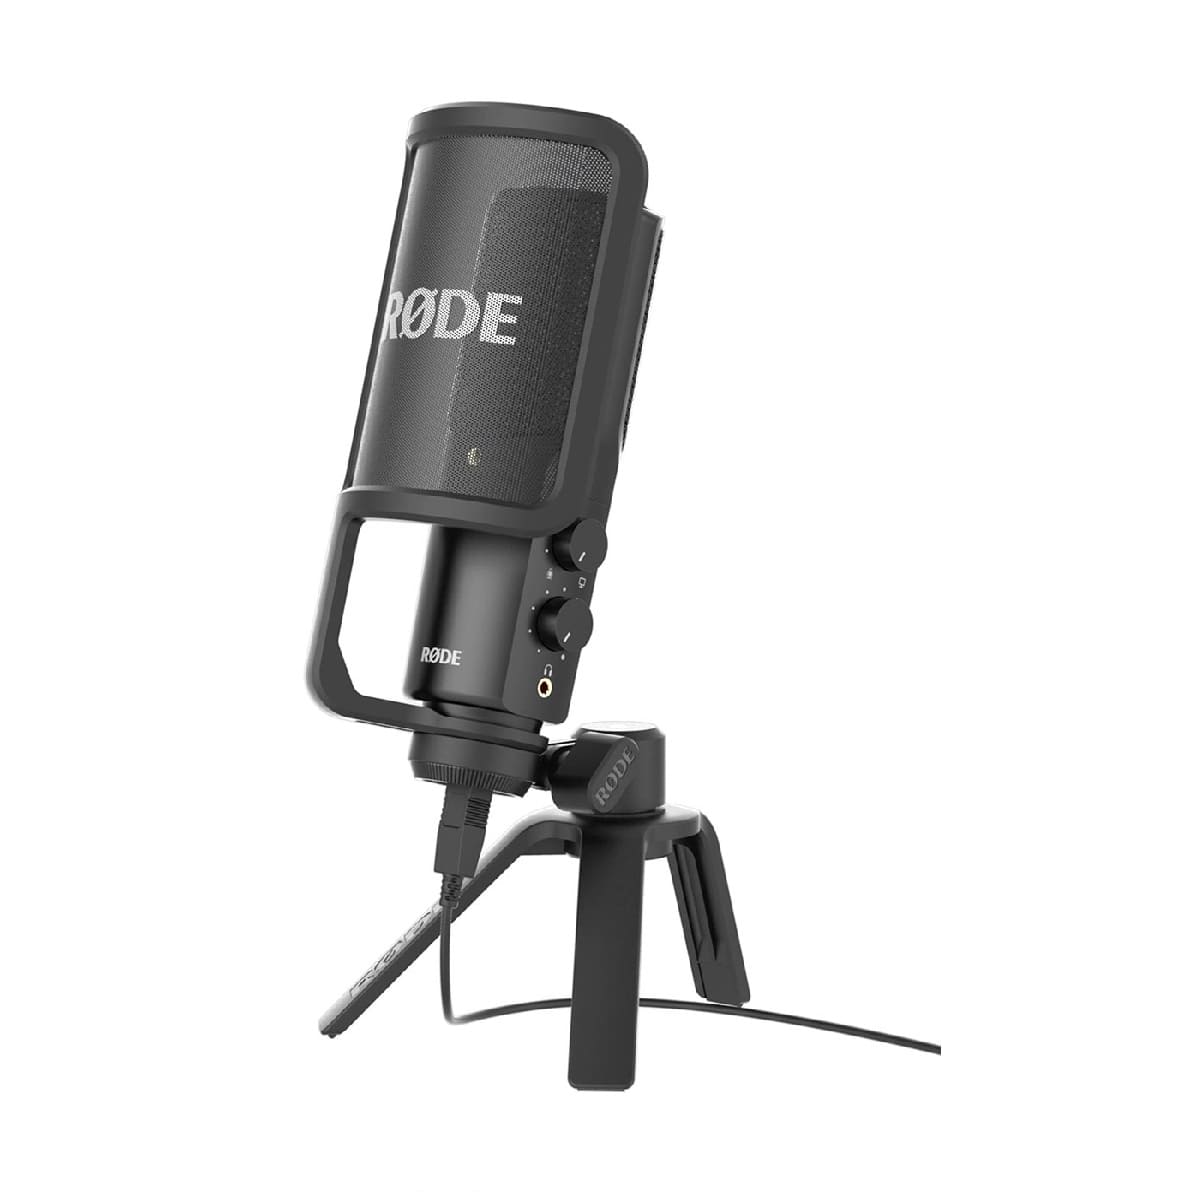 Rode NT-USB Versatile Studio-Quality USB Cardioid Condenser Microphone